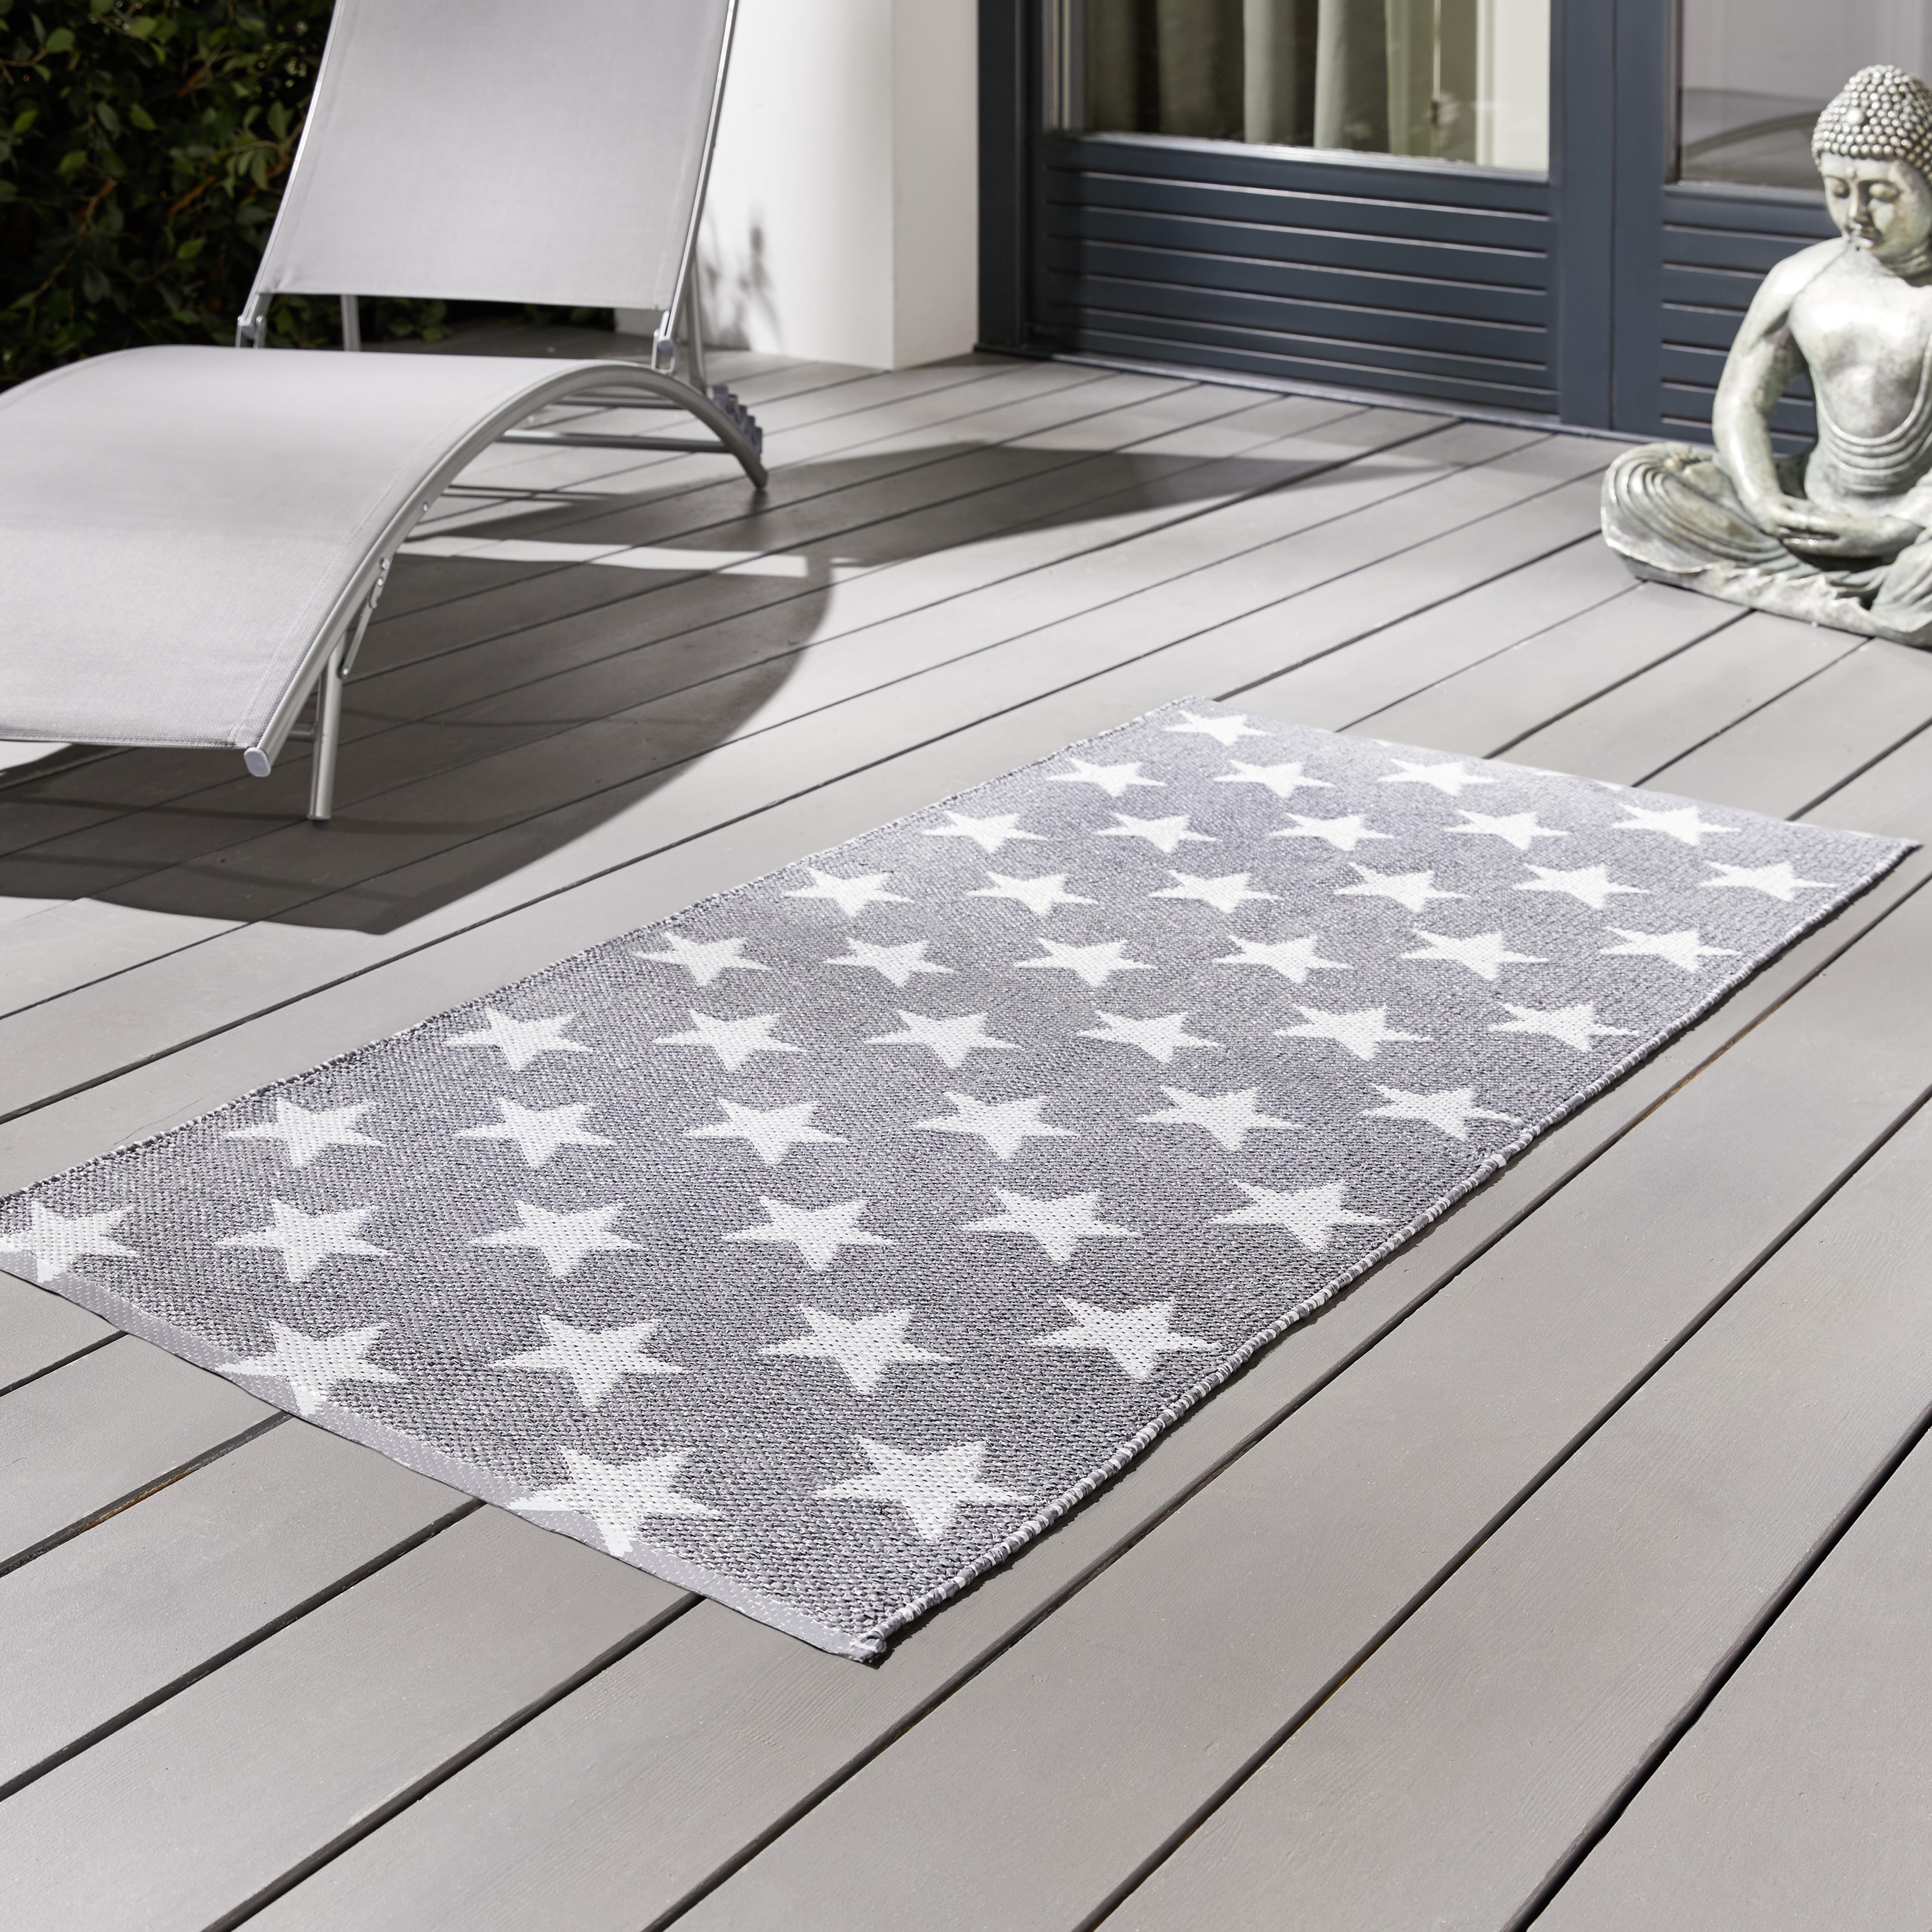 Outdoorteppich "Stars" ca. 70x140 cm, grau/weiß - Weiß/Grau, MODERN, Textil (70/140cm) - Bessagi Garden